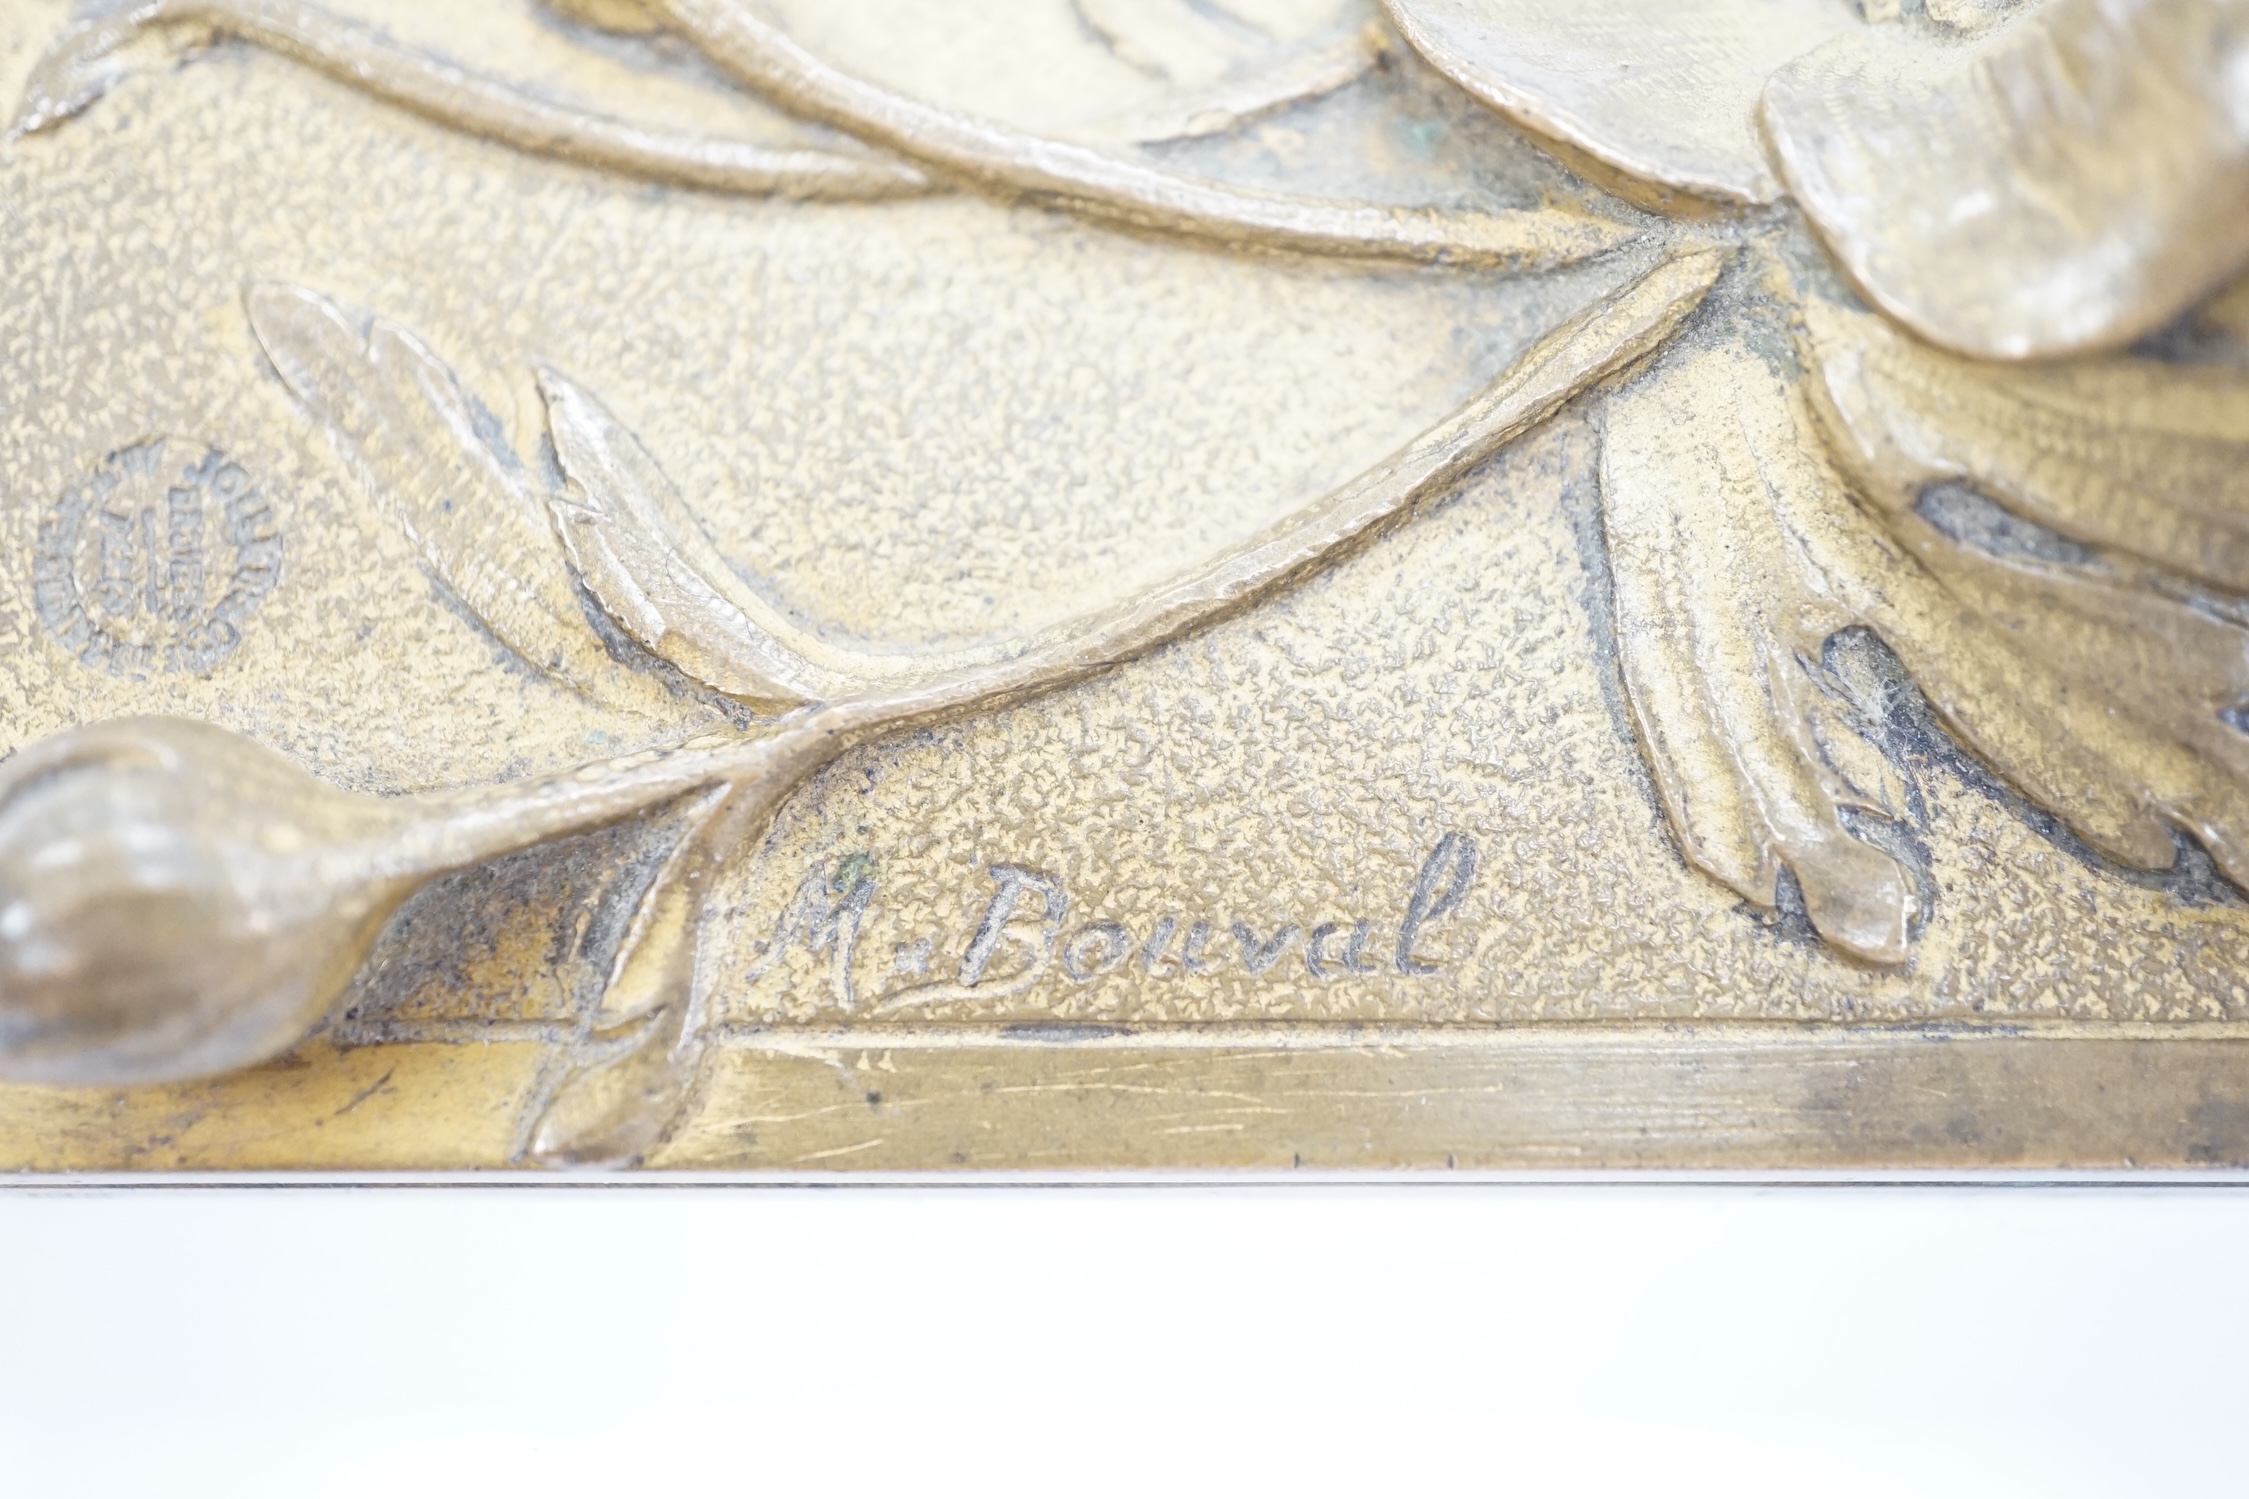 An Art Nouveau, Maurice Bouval bronze paperweight, 16.5cm wide